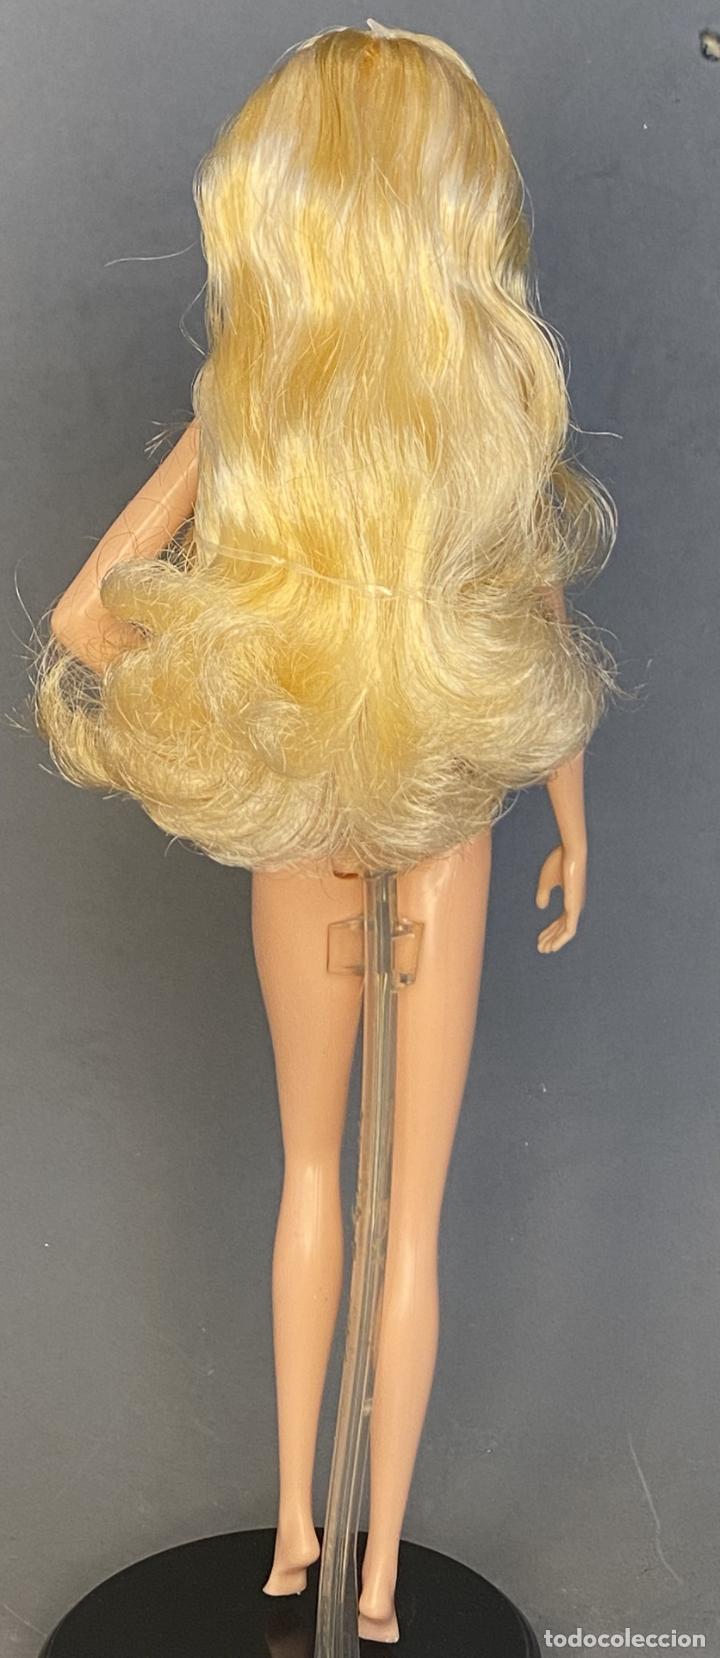 Virtual Barbie Doll Porn - muÃ±eca desnuda, doll nude barbie top model - Buy Barbie and Ken dolls on  todocoleccion